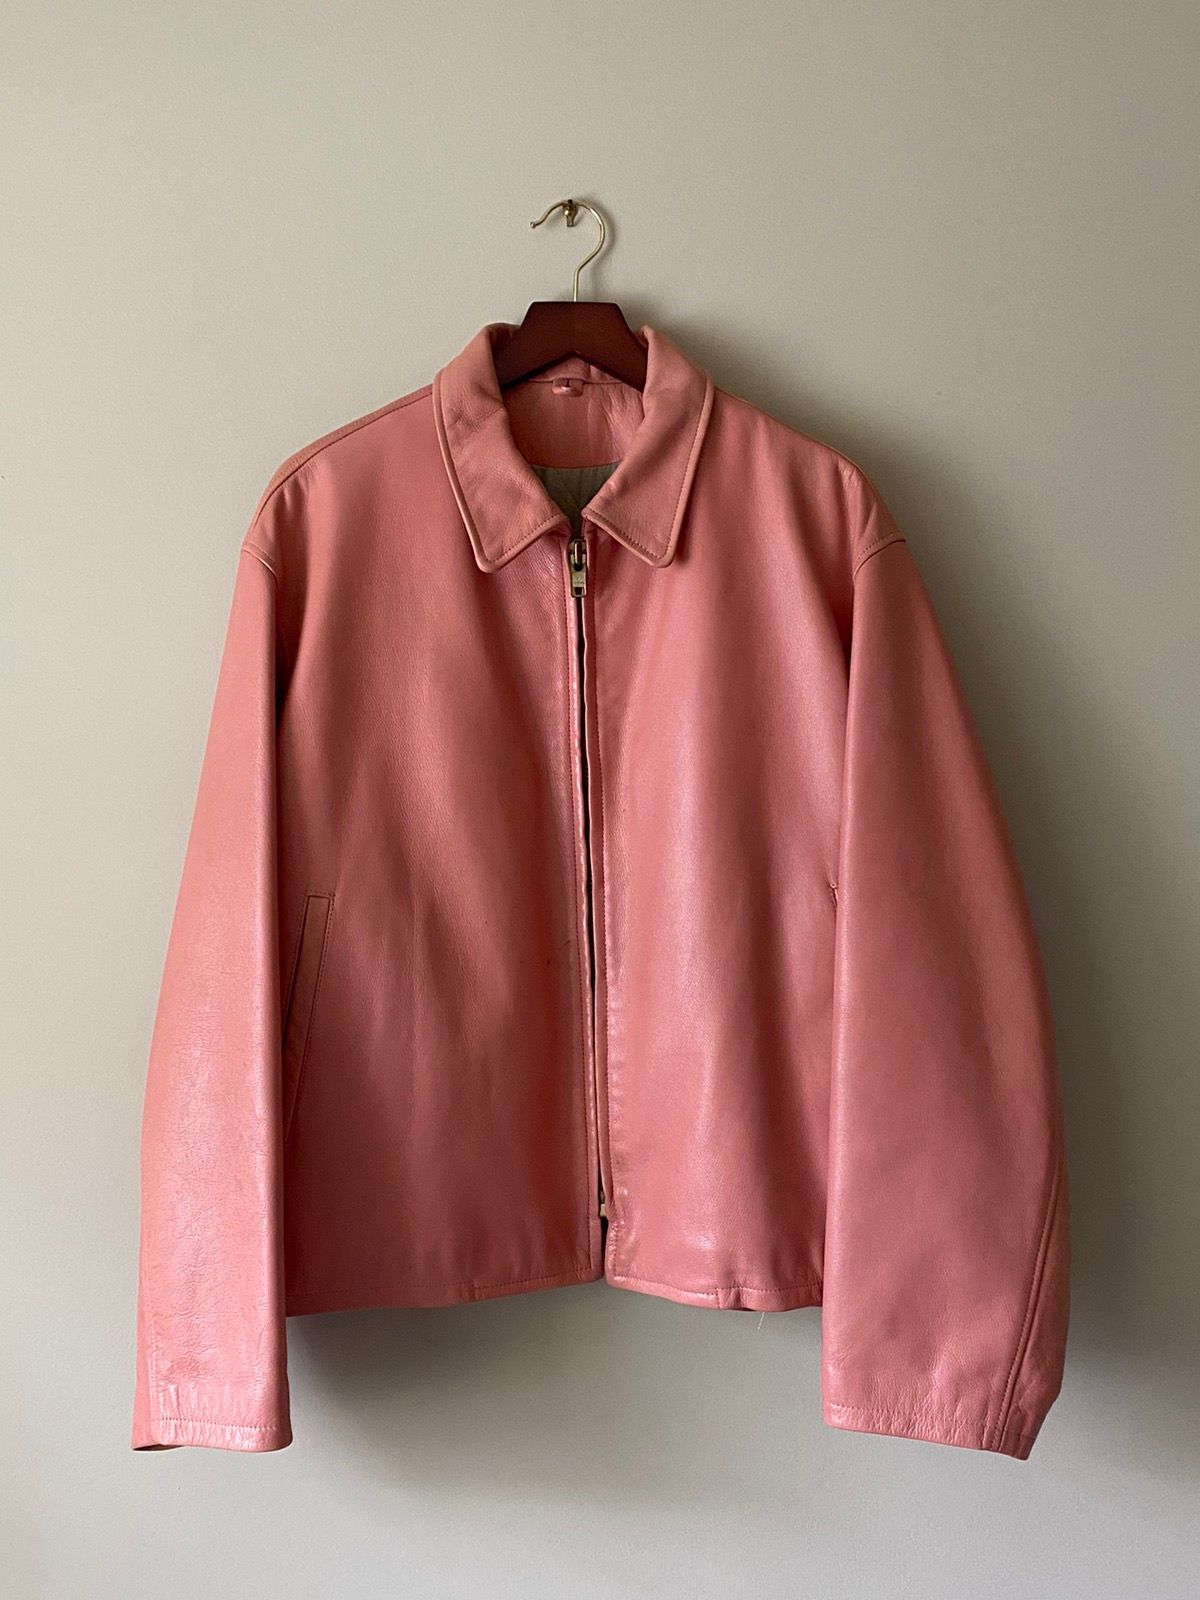 Pre-owned Yohji Yamamoto 91' Salmon Pink Leather Jacket